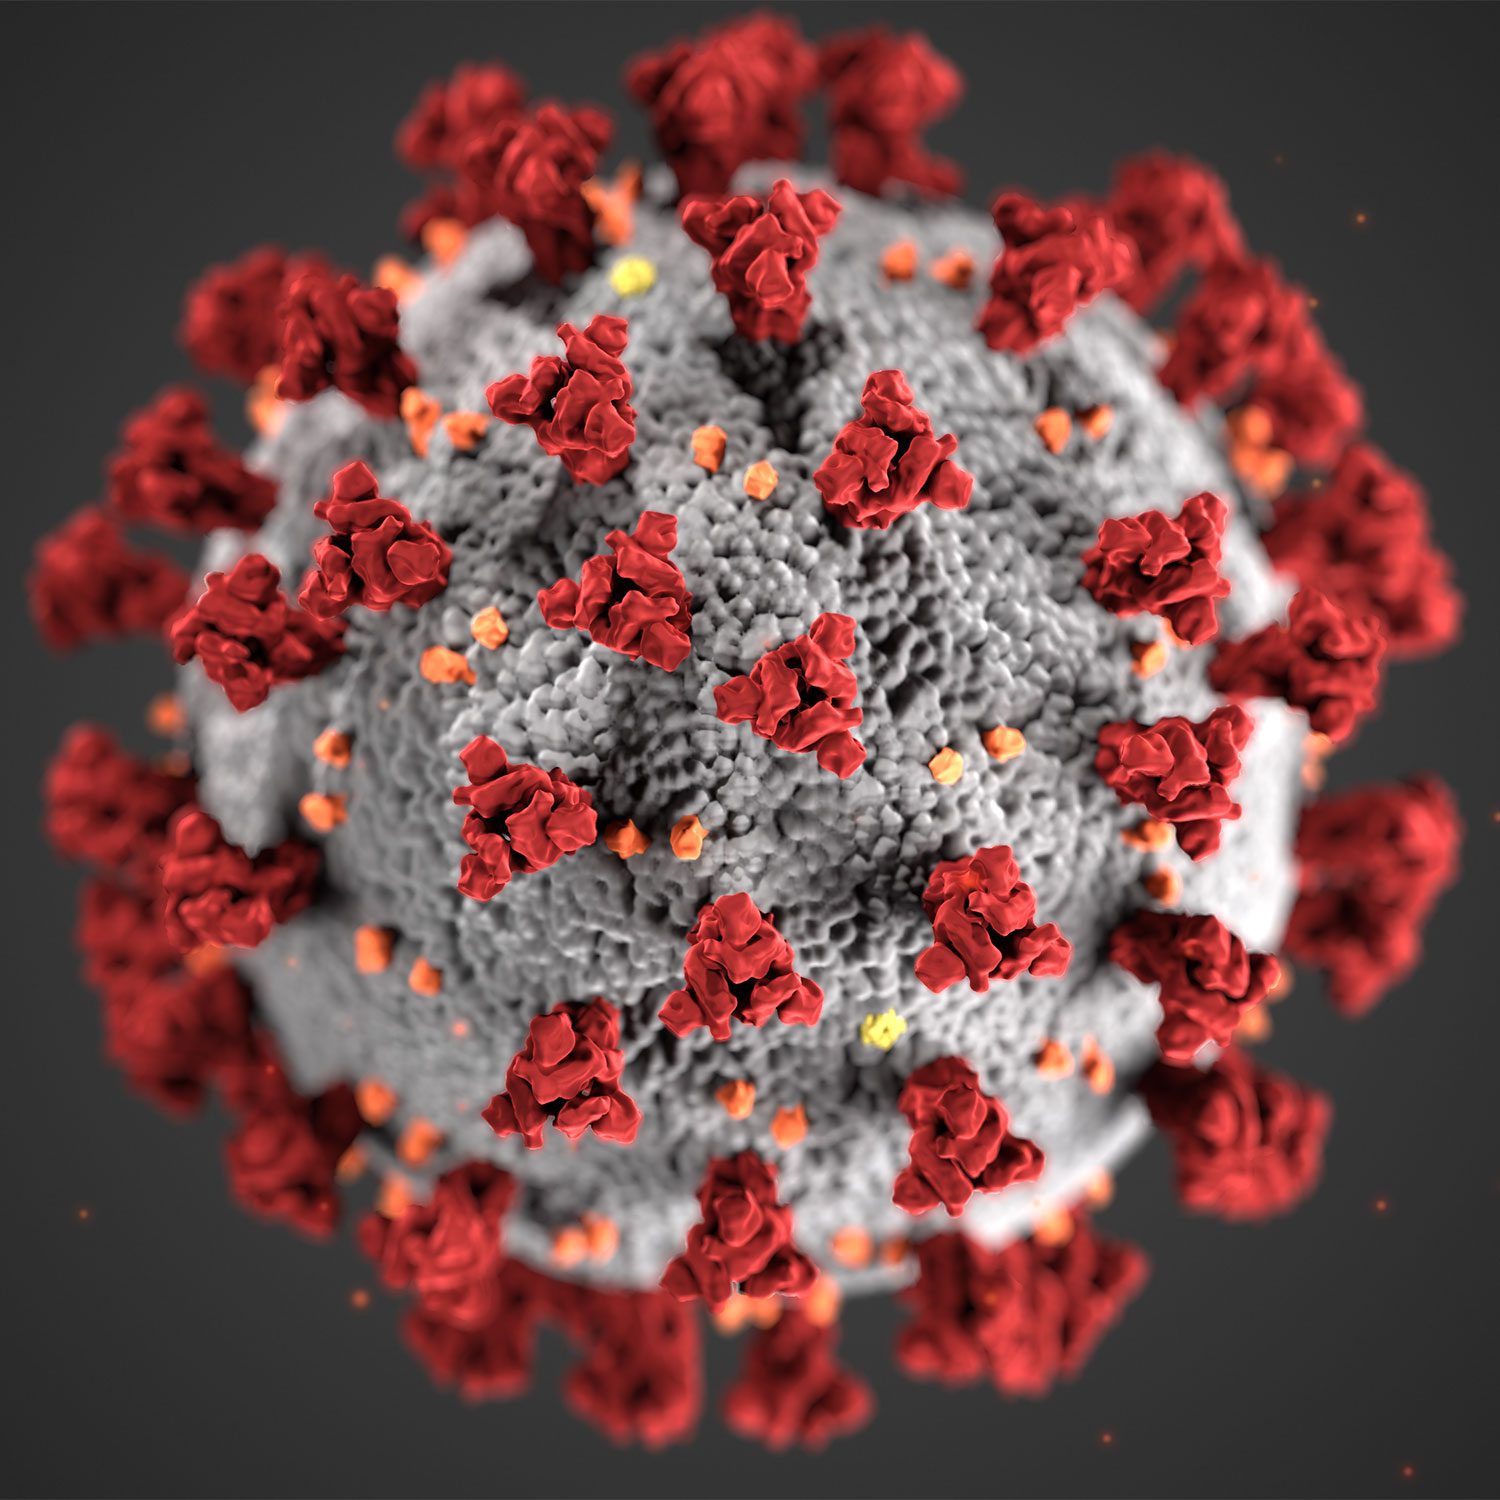 Microscopic photo of COVID-19 virus